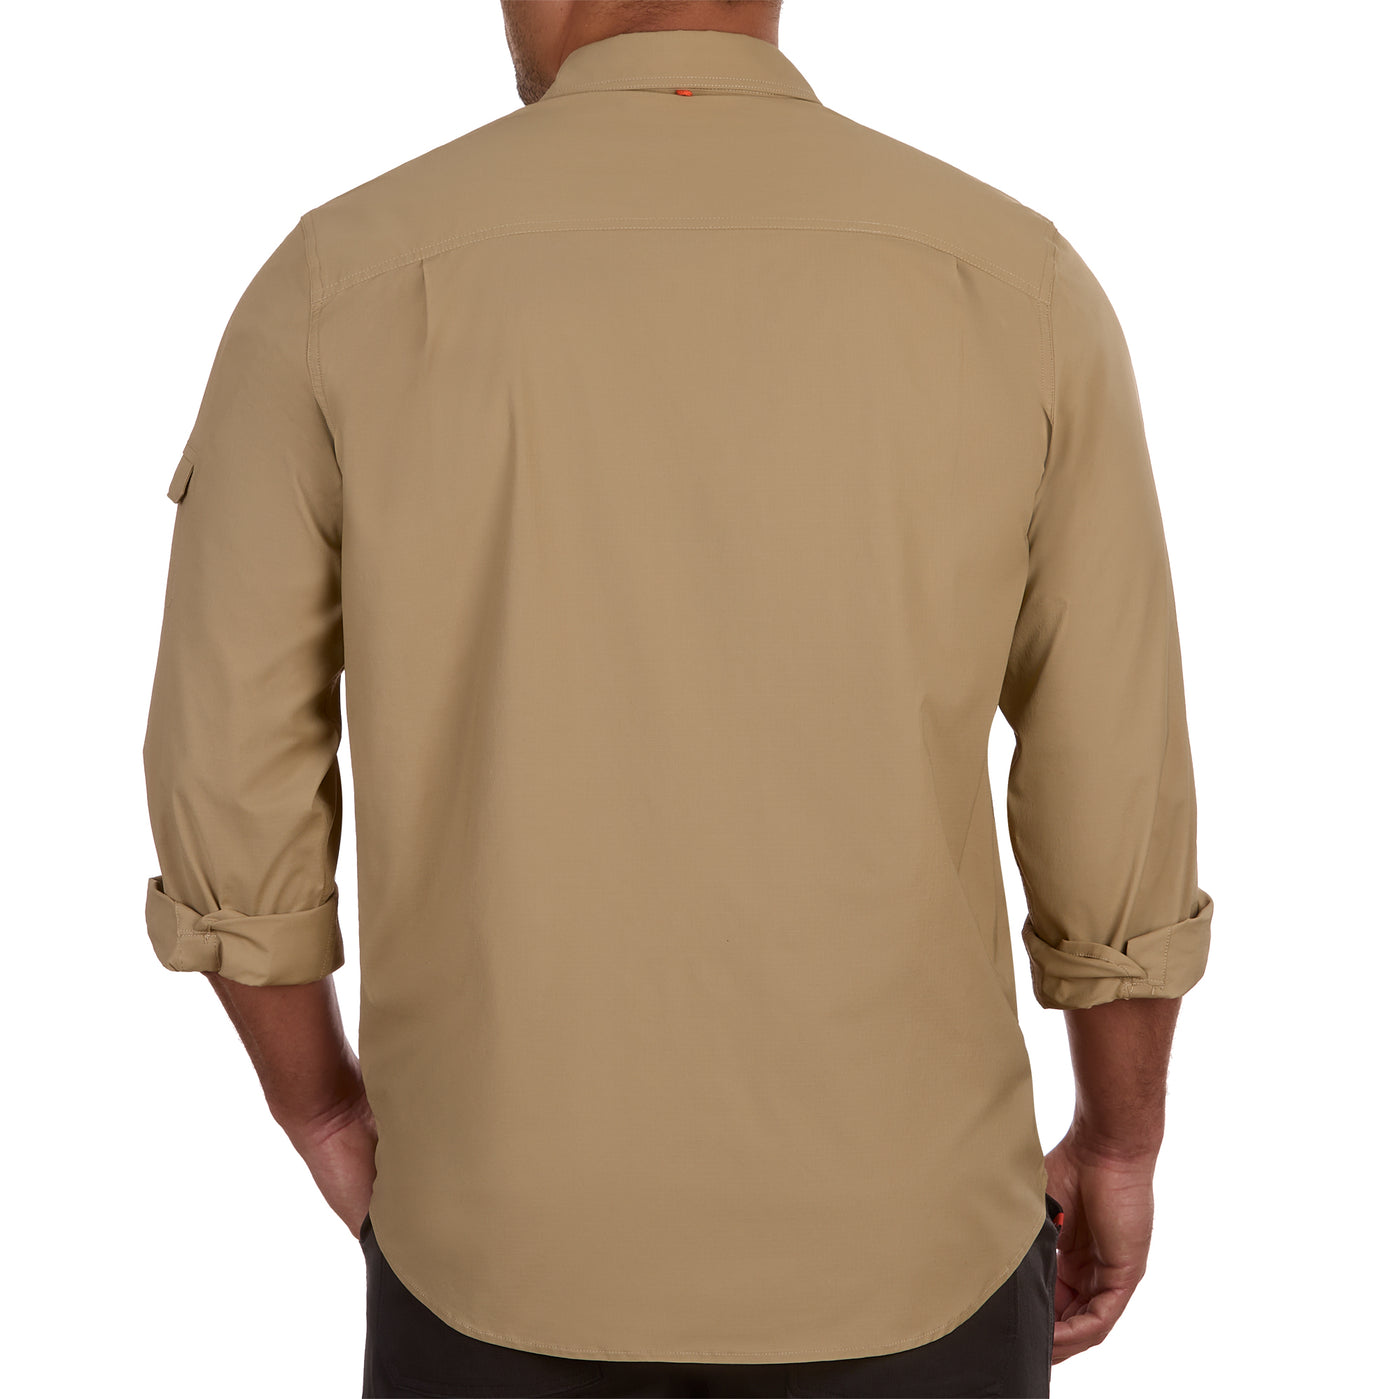 The American Outdoorsman Blackfoot River Long Sleeve Fishing Shirt - UPF 30 Protection Quick-Dry & Moisture-Wicking Fabric (Jungle Green, XL)